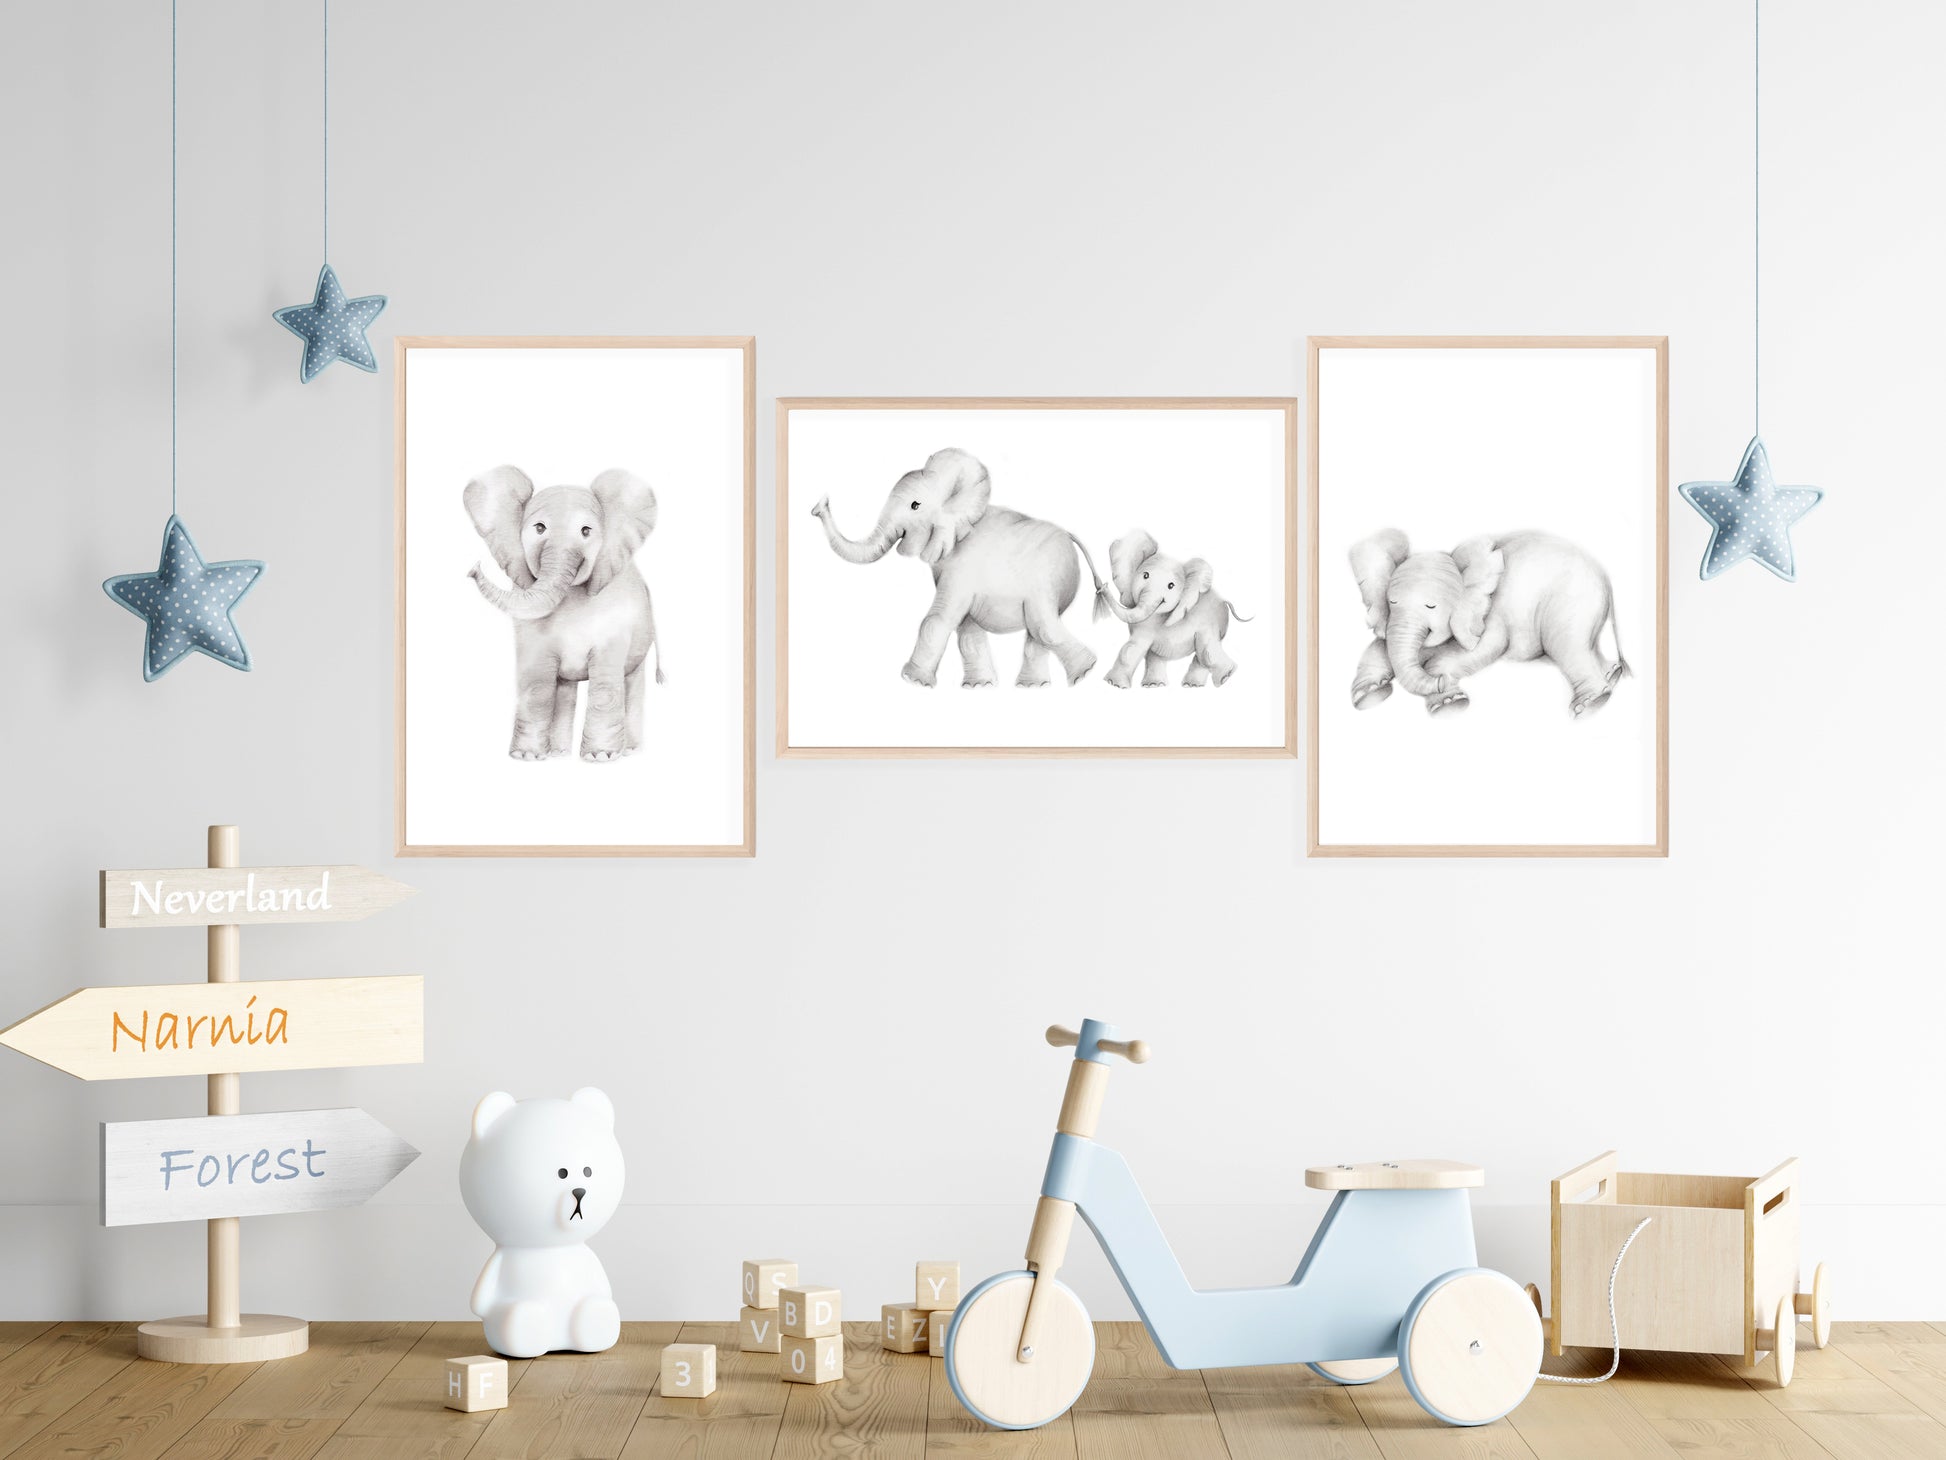 Baby Elephants Art Print - Set of 3- Studio Q - Art by Nicky Quartermaine Scott